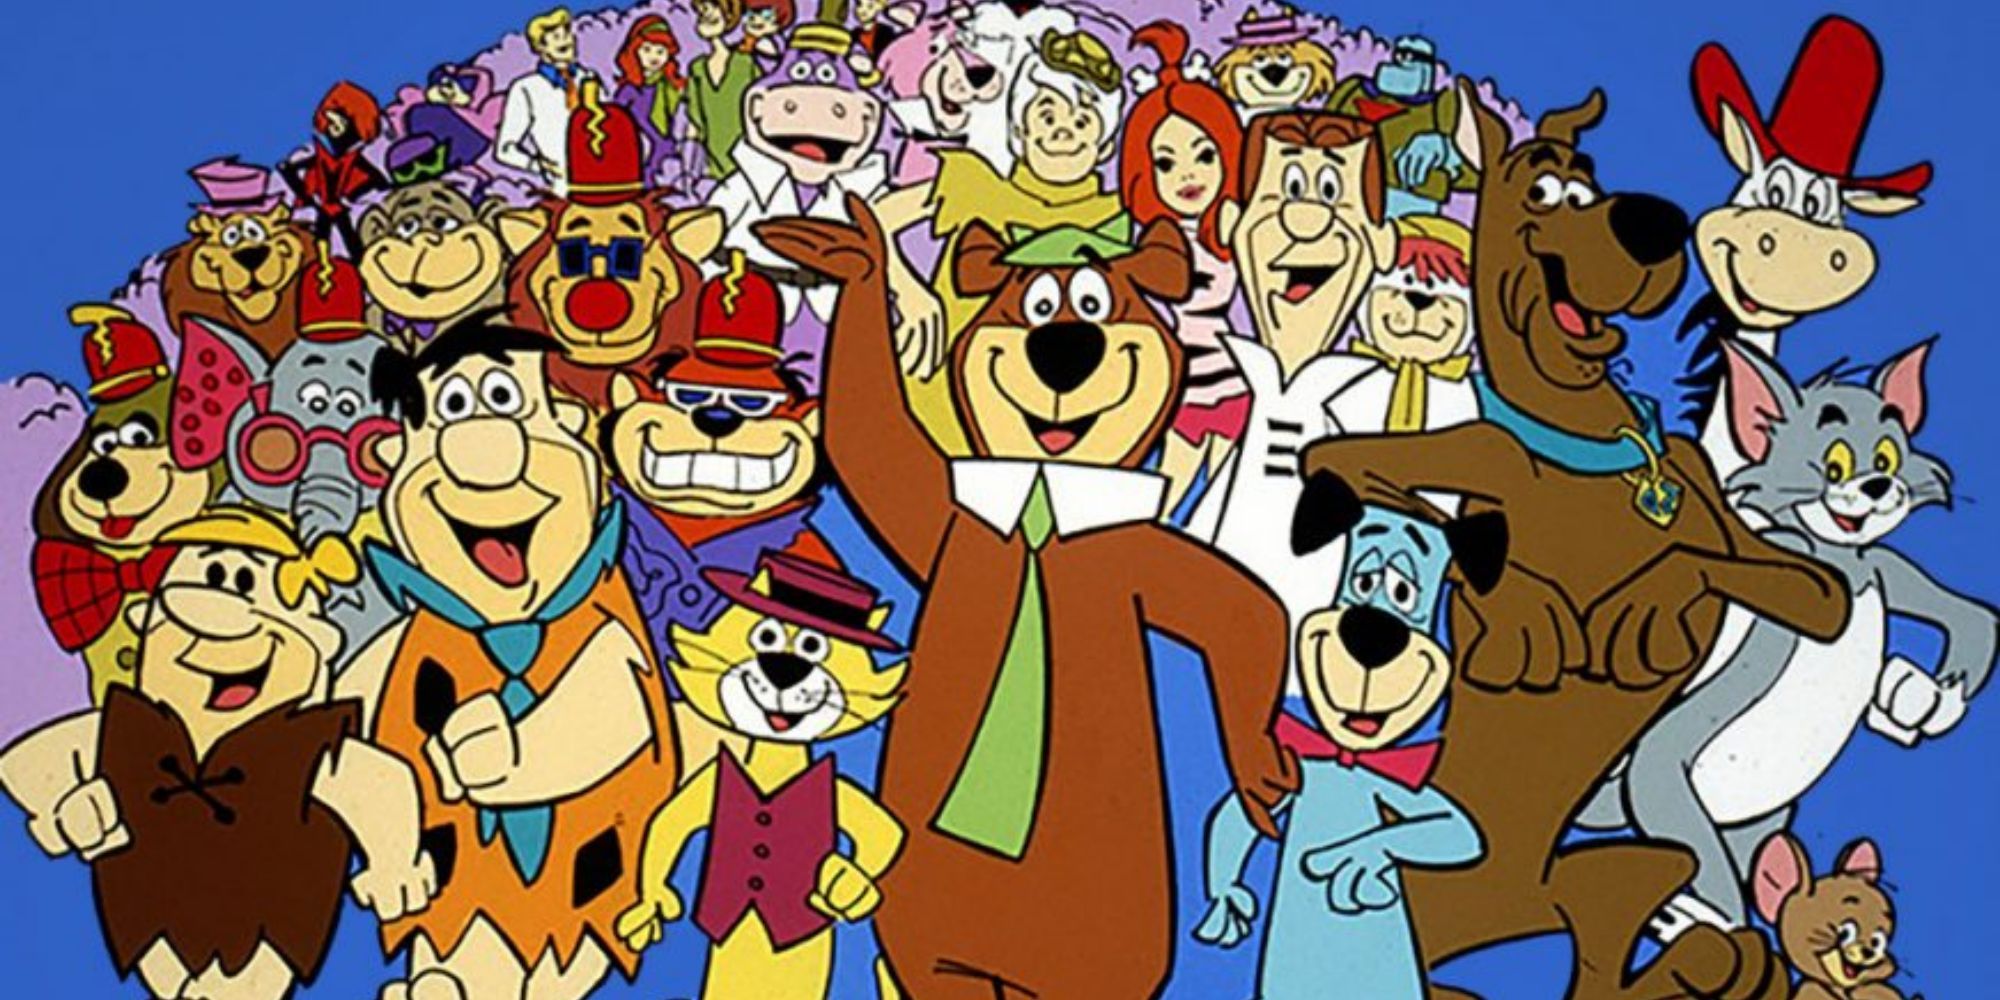 10 Most Iconic Classic Hanna-Barbera Shows, According to IMDB